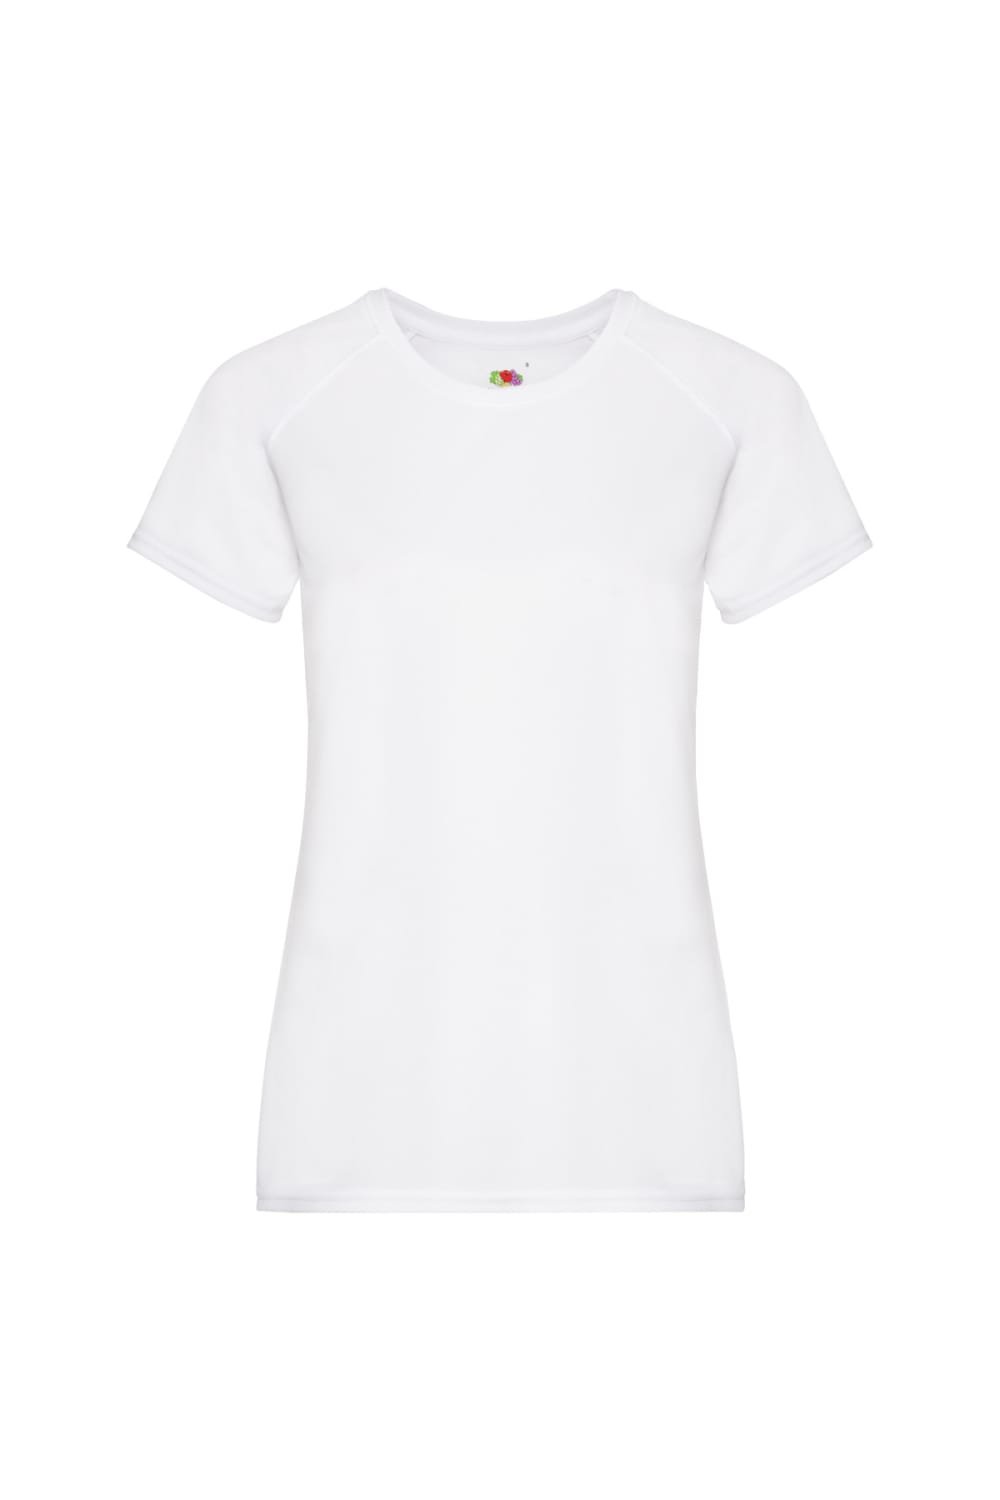 Fruit Of The Loom Ladies/Womens Performance Sportswear T-Shirt (White)